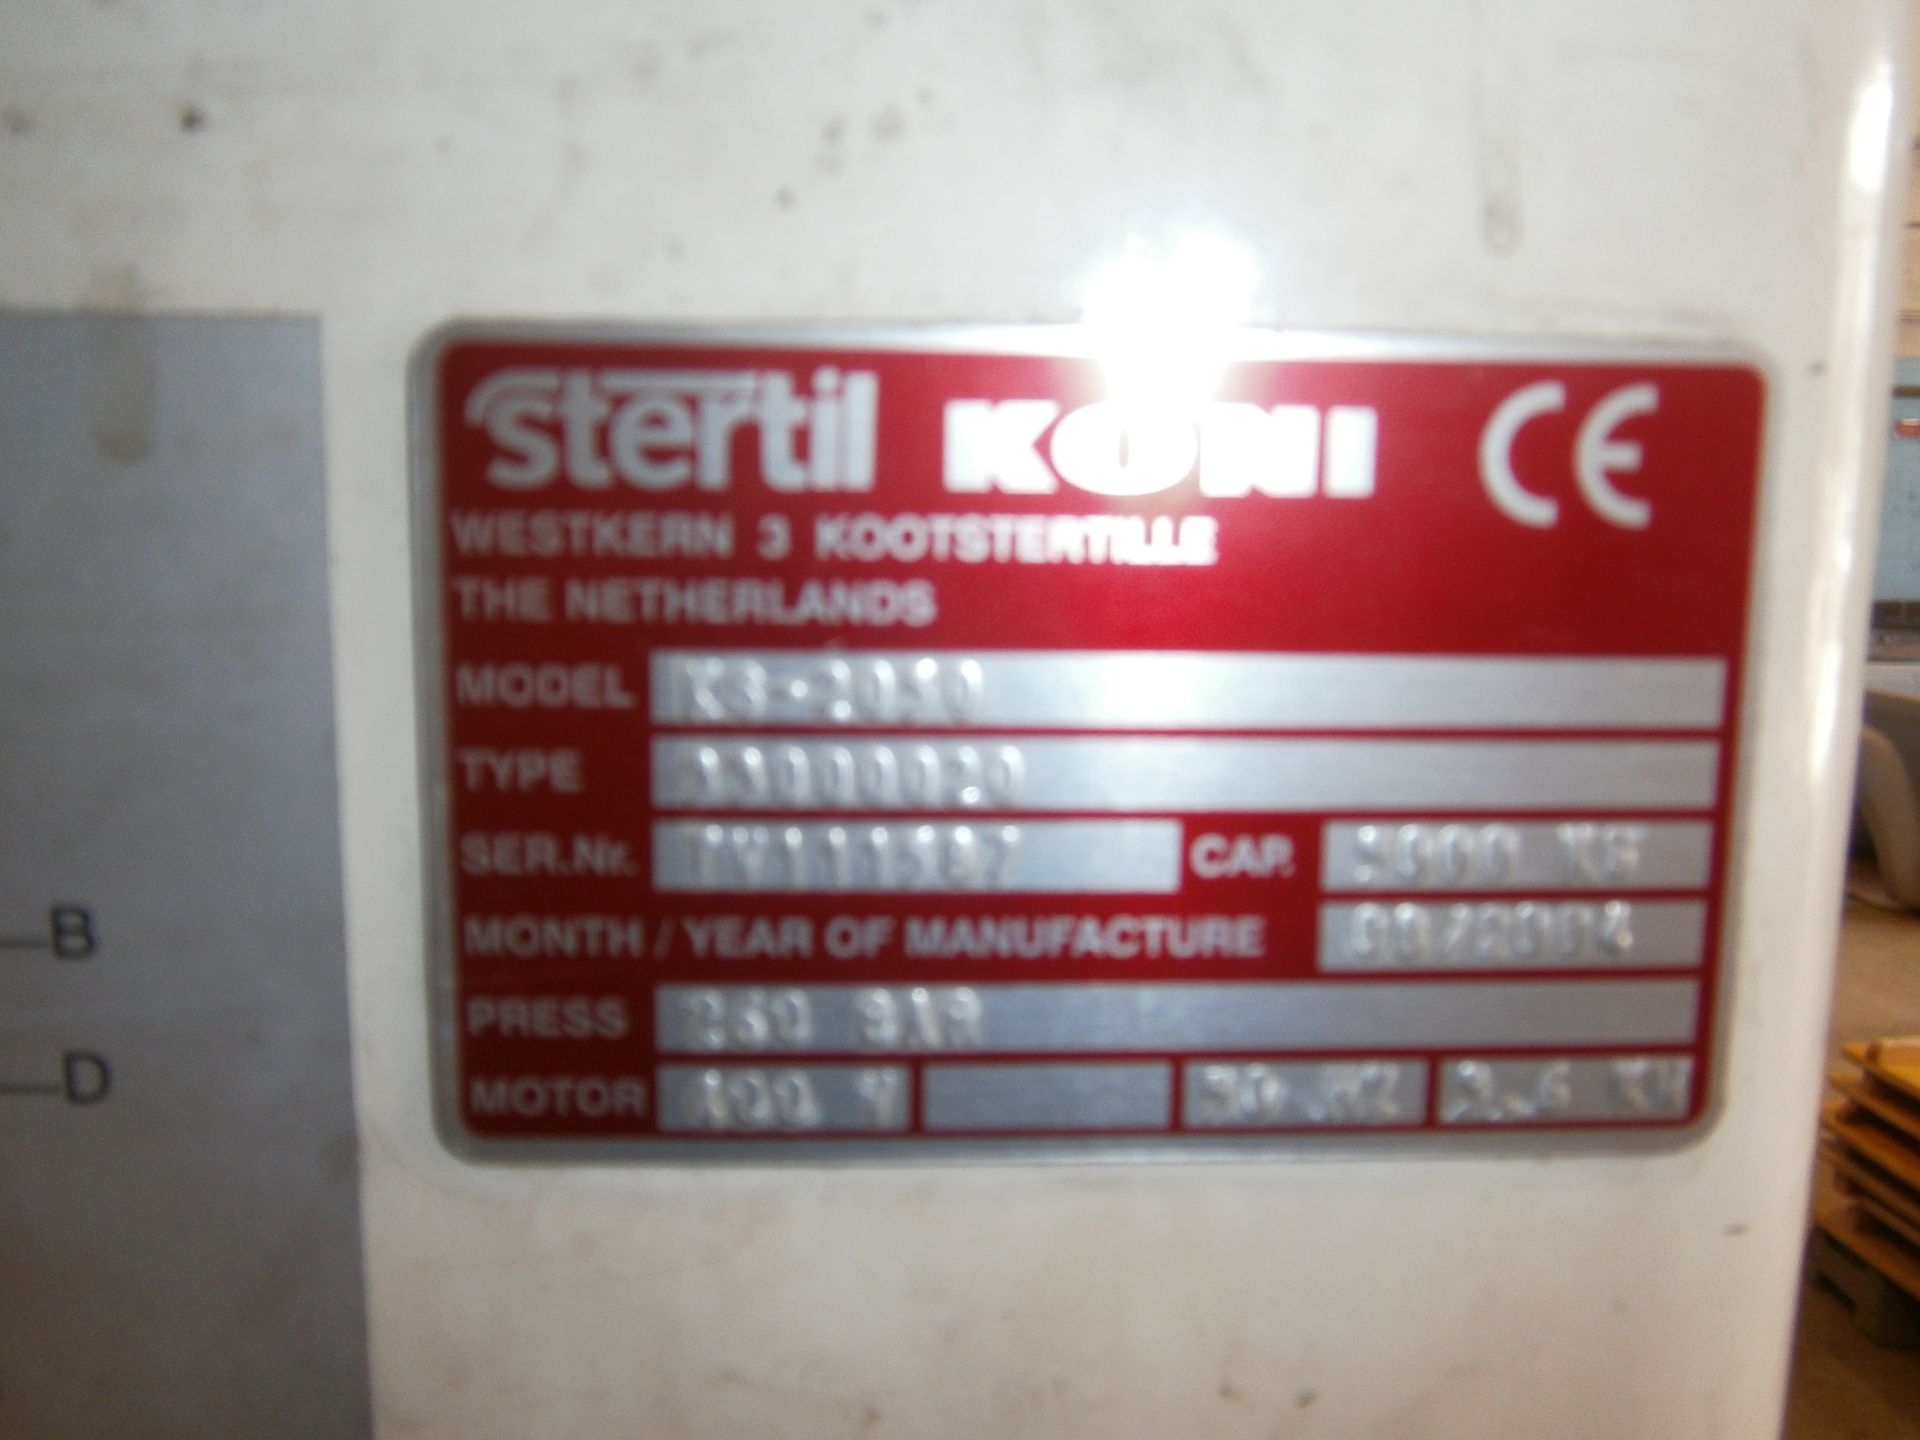 Stertil Koni Model KS-2050 2 Post Vehicle Lift - Serial No. - Image 3 of 3